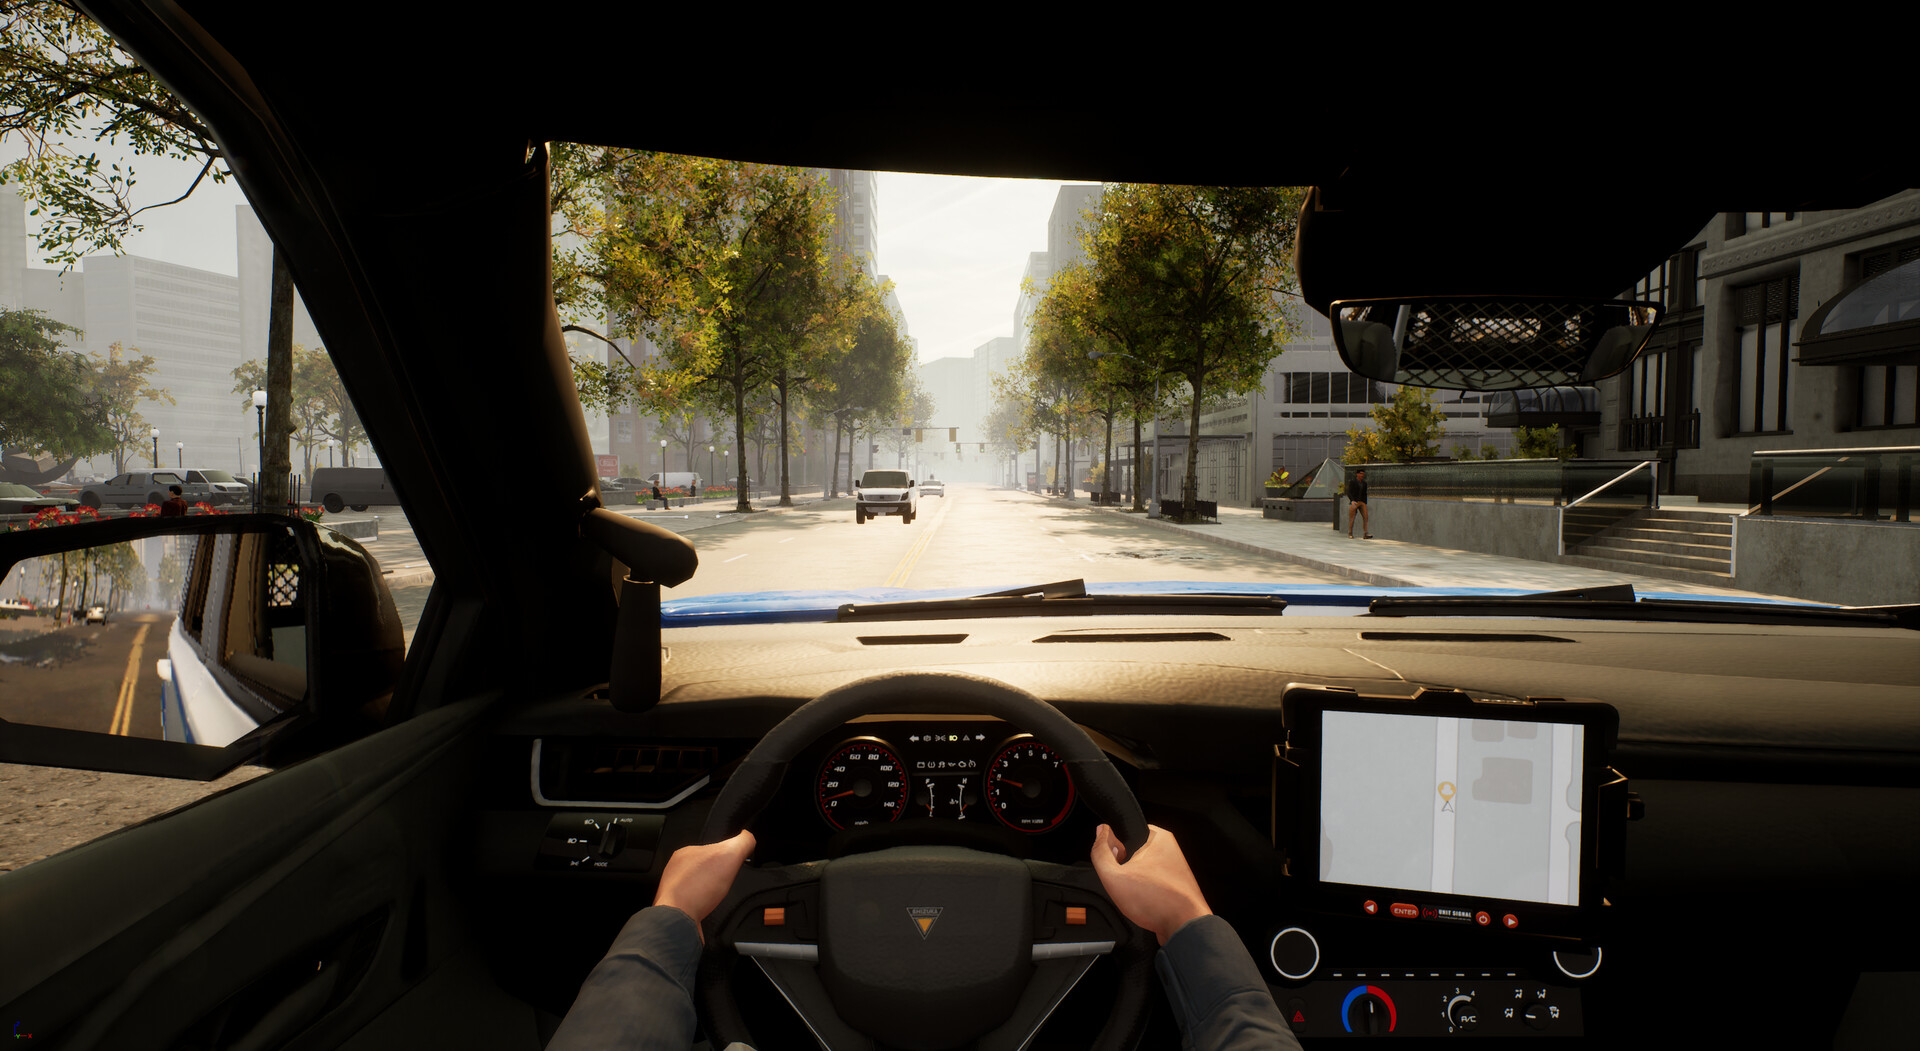 Police Simulator: Patrol Officers - Urban Terrain Vehicle DLC EU PS5 CD Key